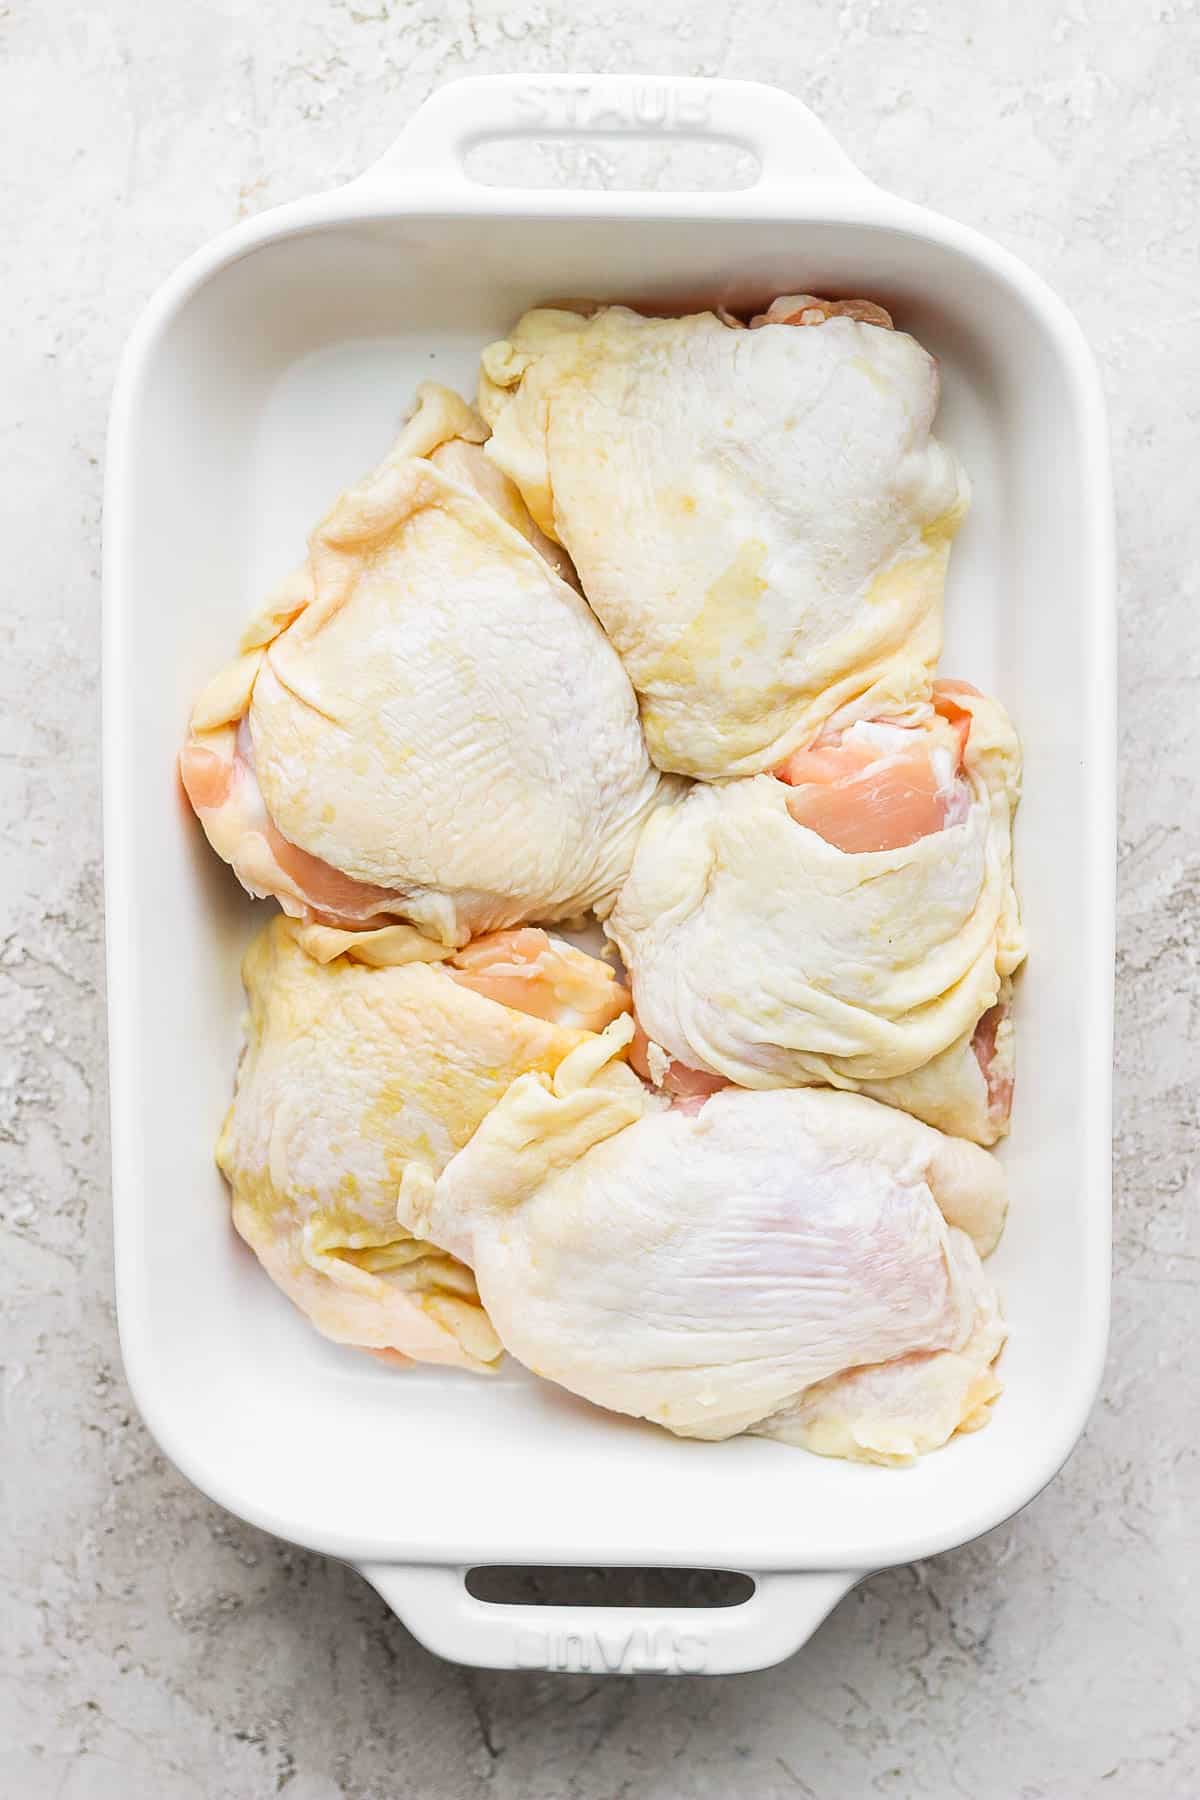 Five raw bone-in, skin on chicken thighs in a casserole dish.